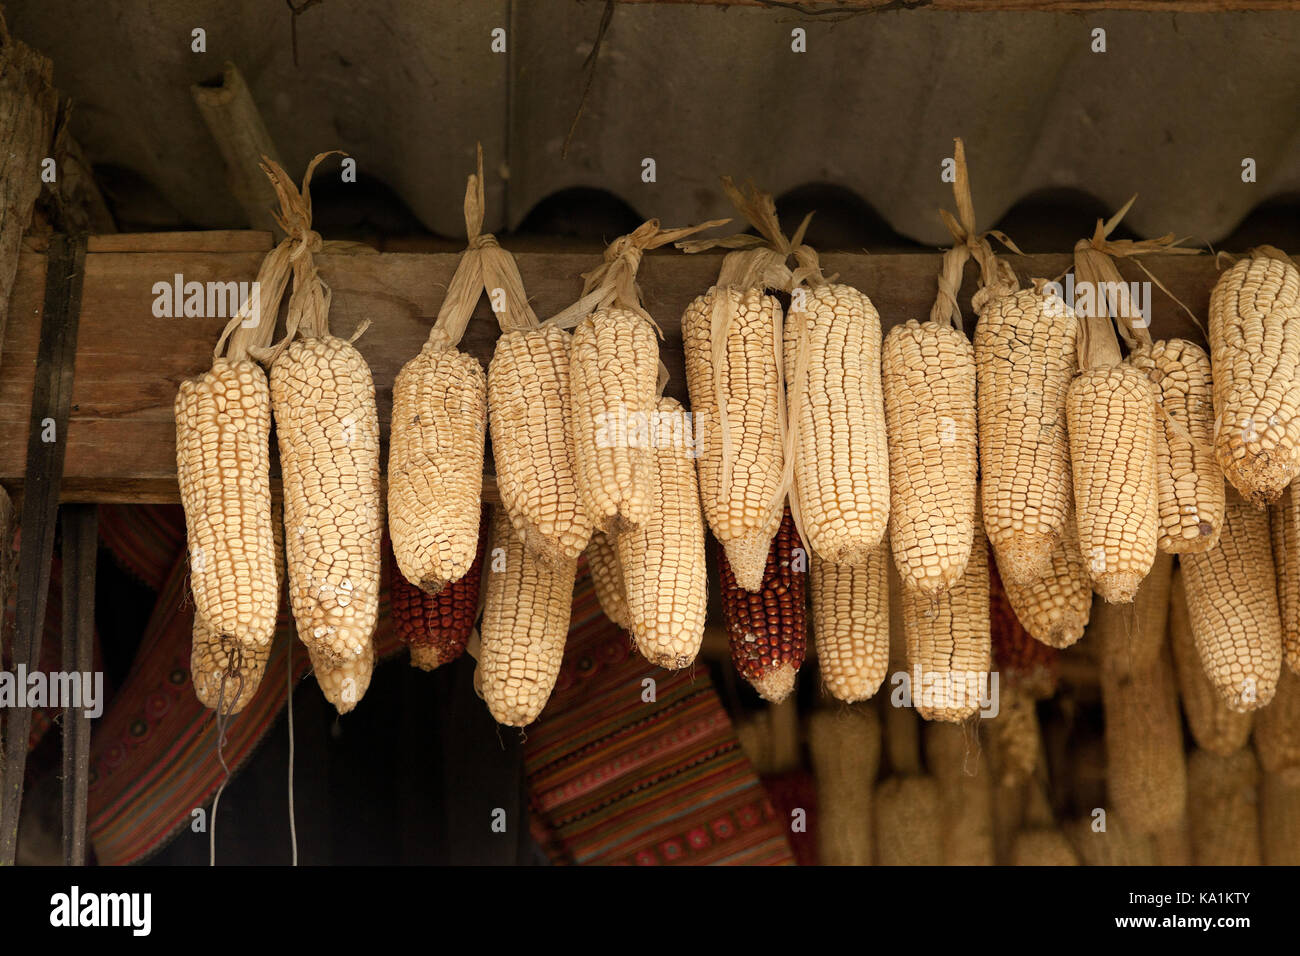 Drying harvested corn for the winter, Cat Cat village, Sapa, Vietnam Stock Photo